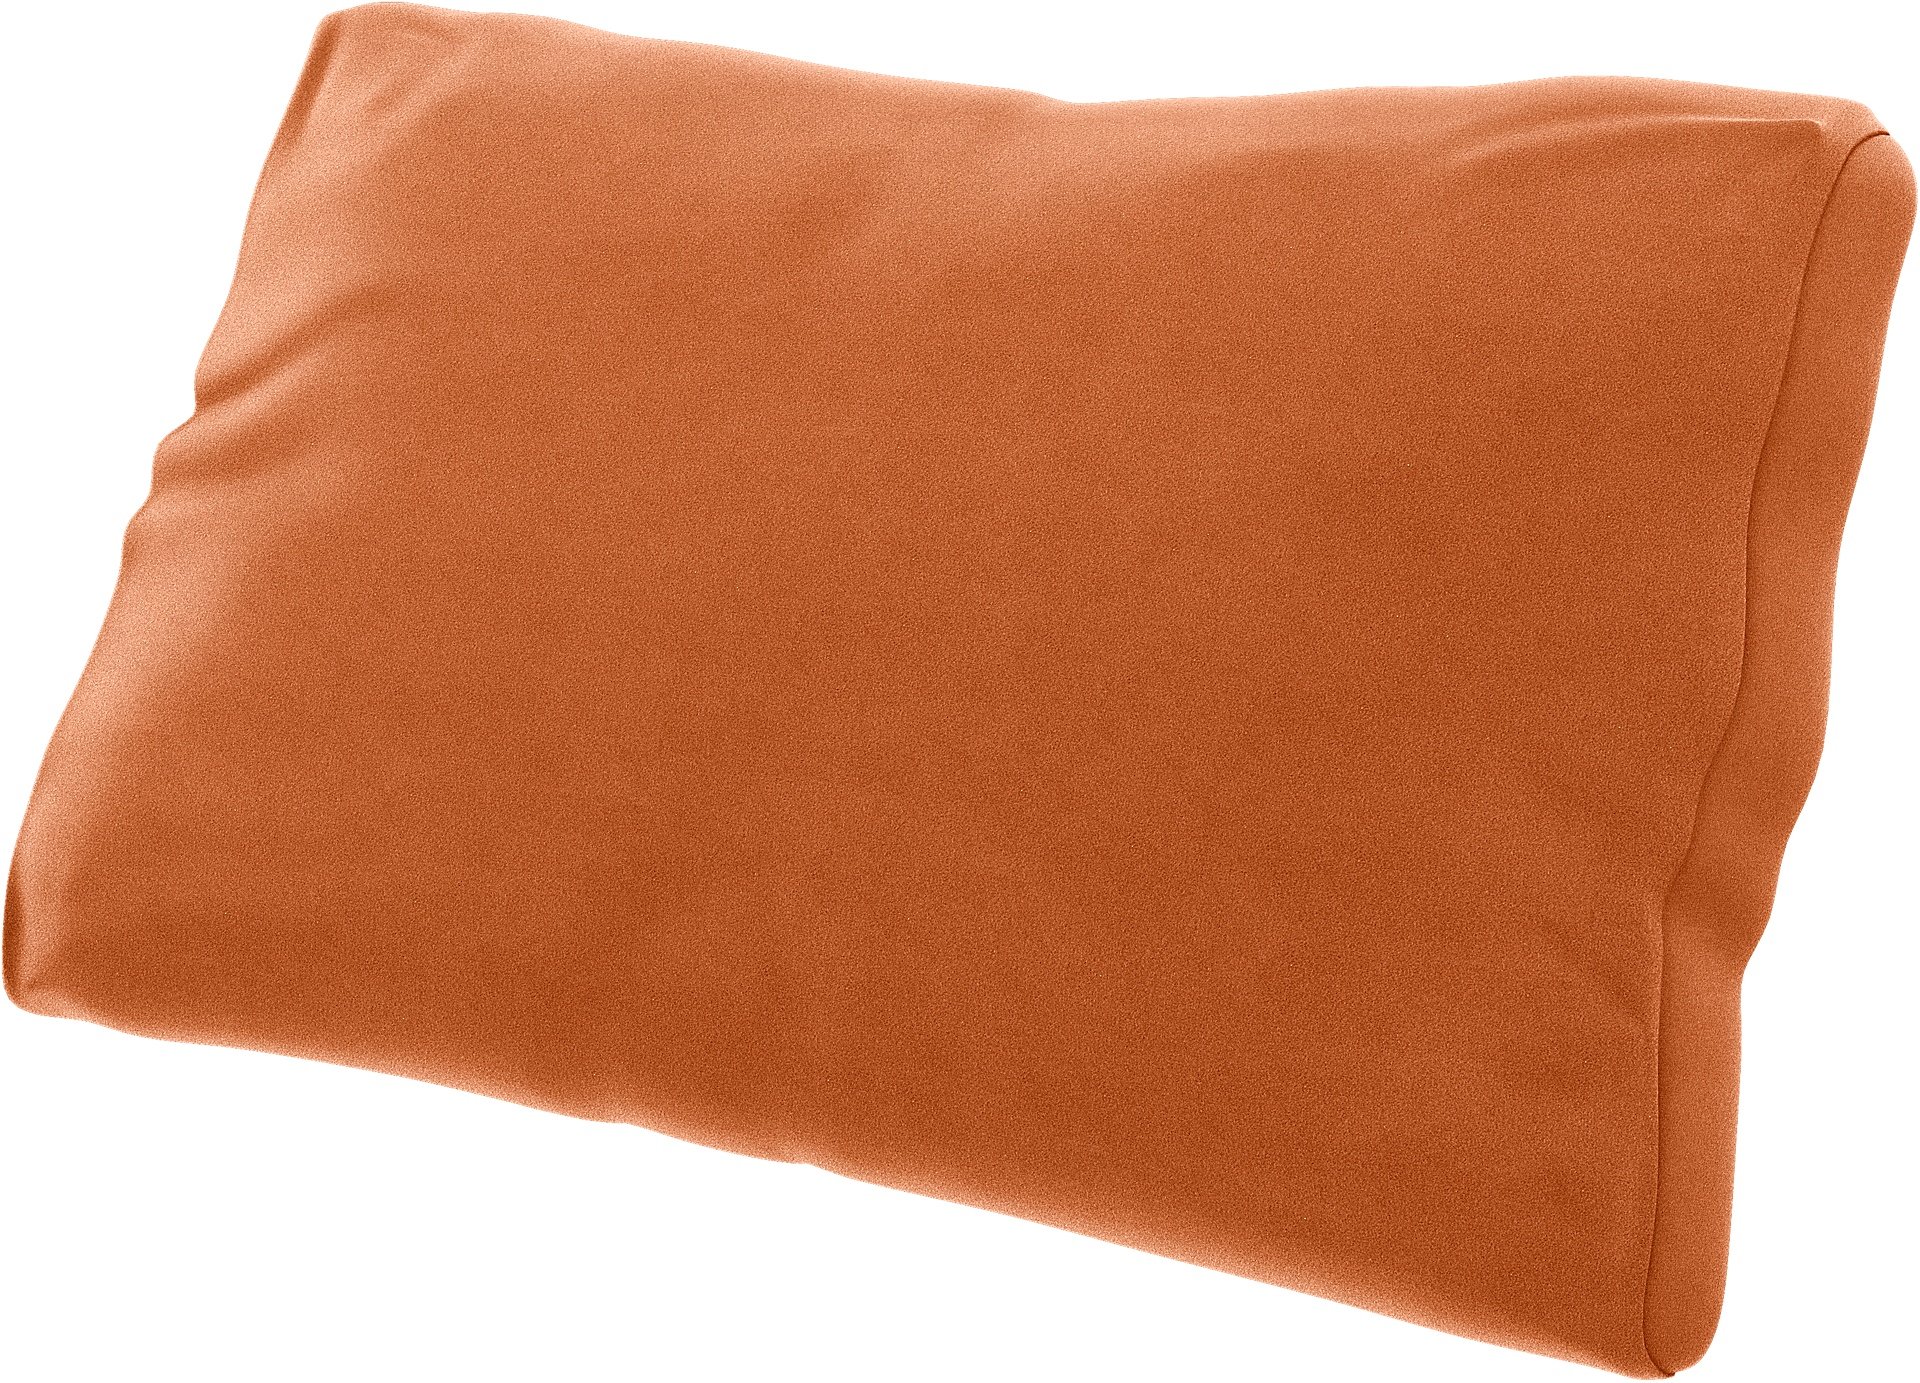 IKEA - Lumbar cushion cover Farlov, Rust, Outdoor - Bemz